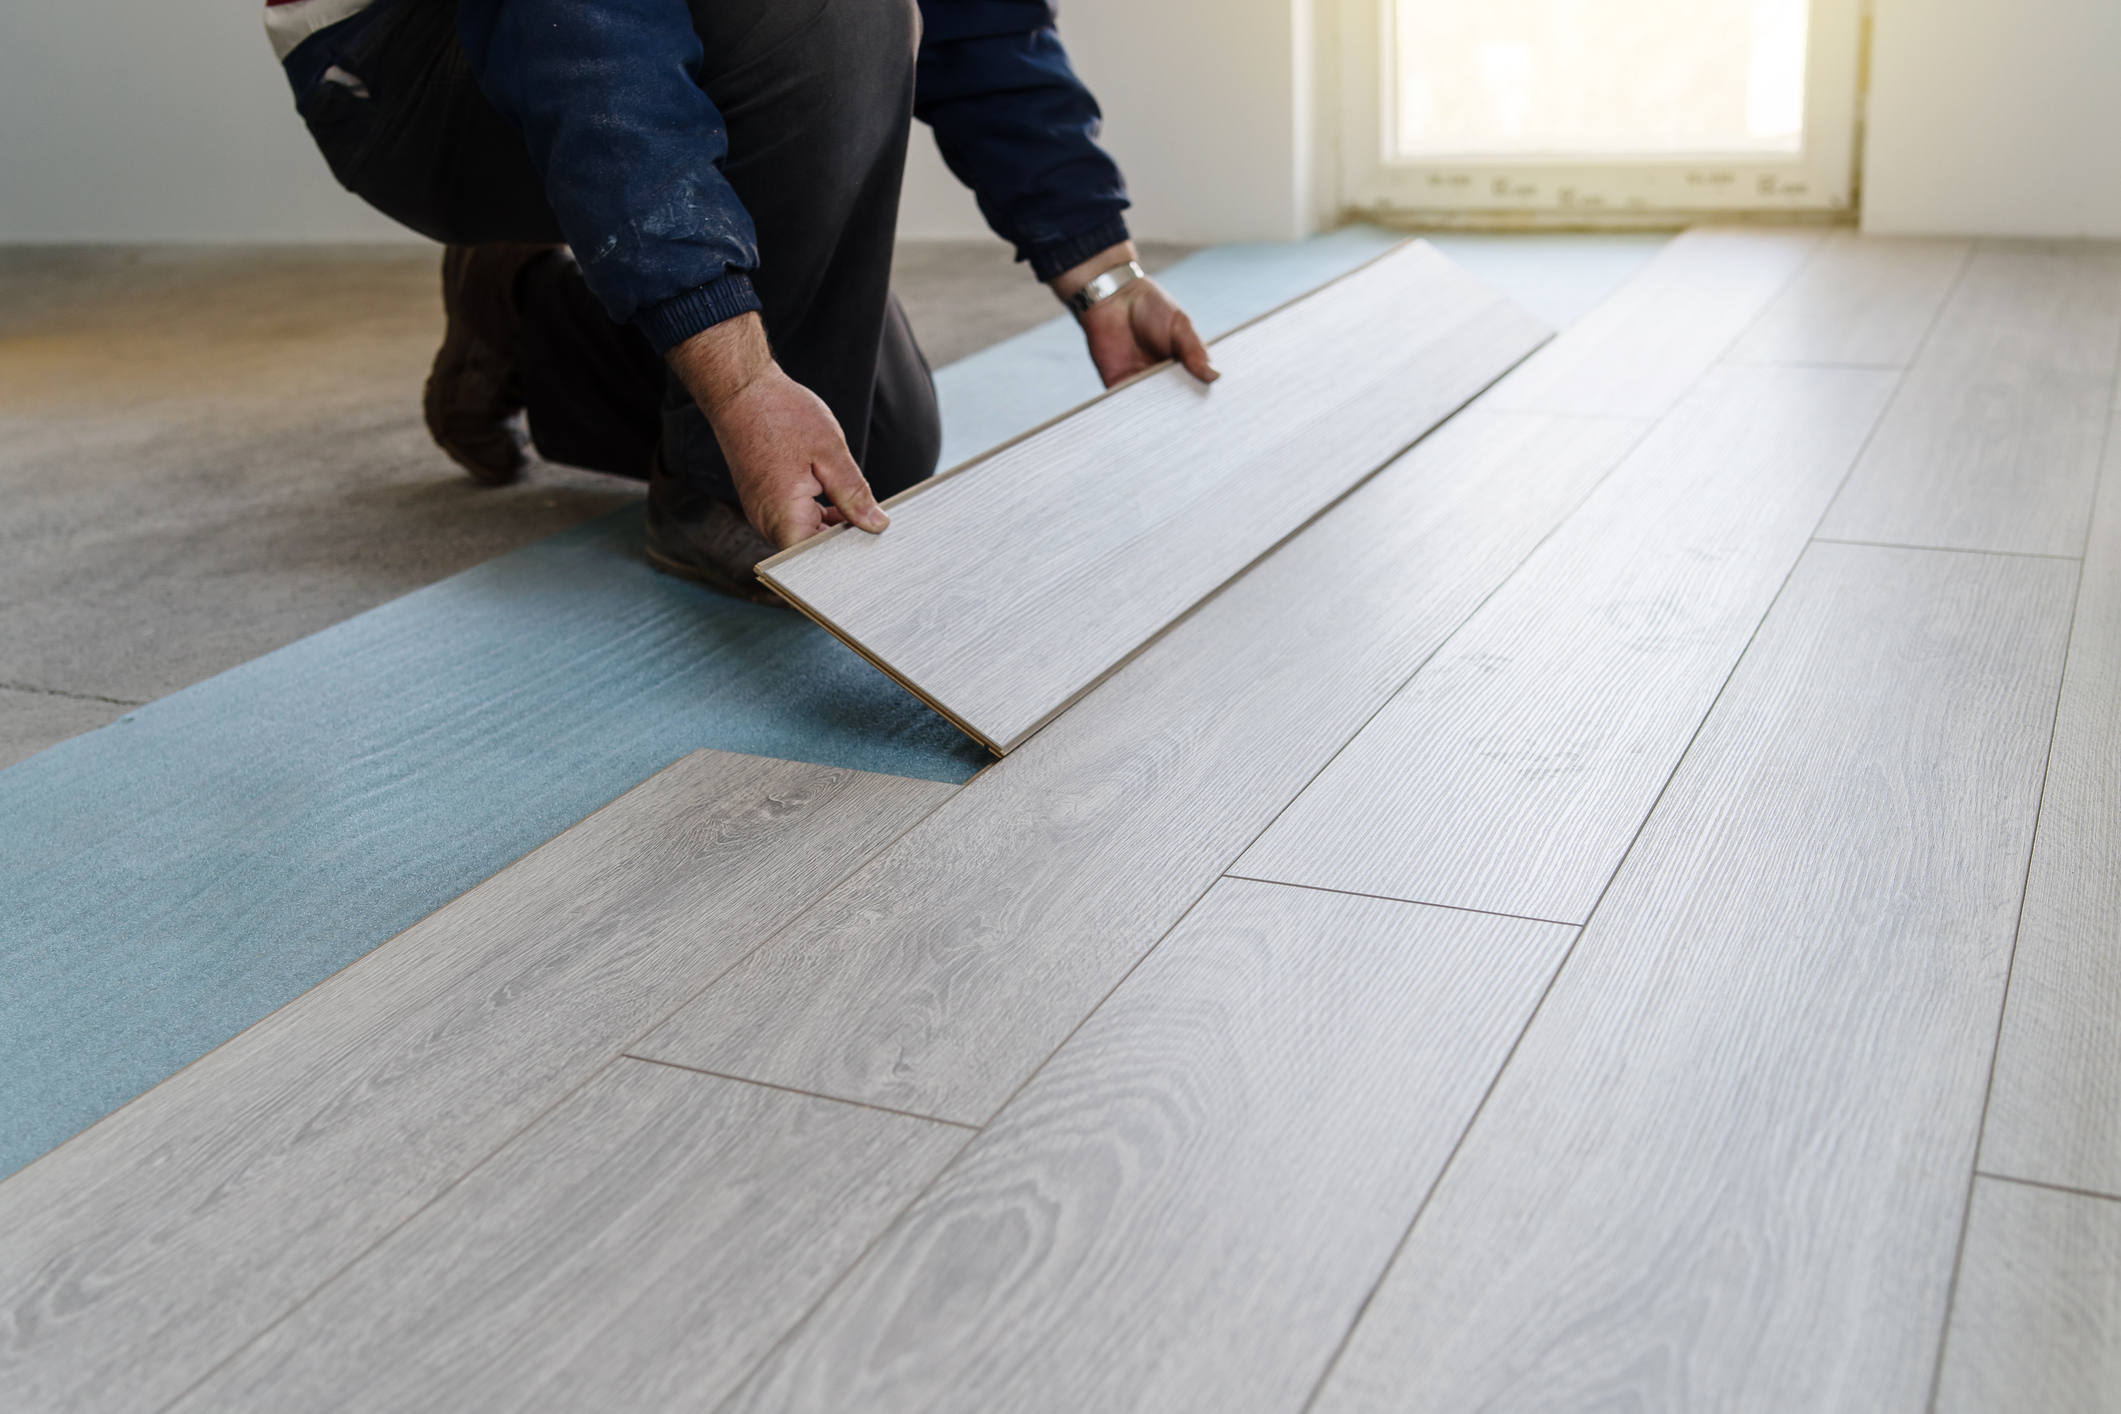 Temporary Flooring Ideas, What Kind Of Rug To Put On Laminate Flooring